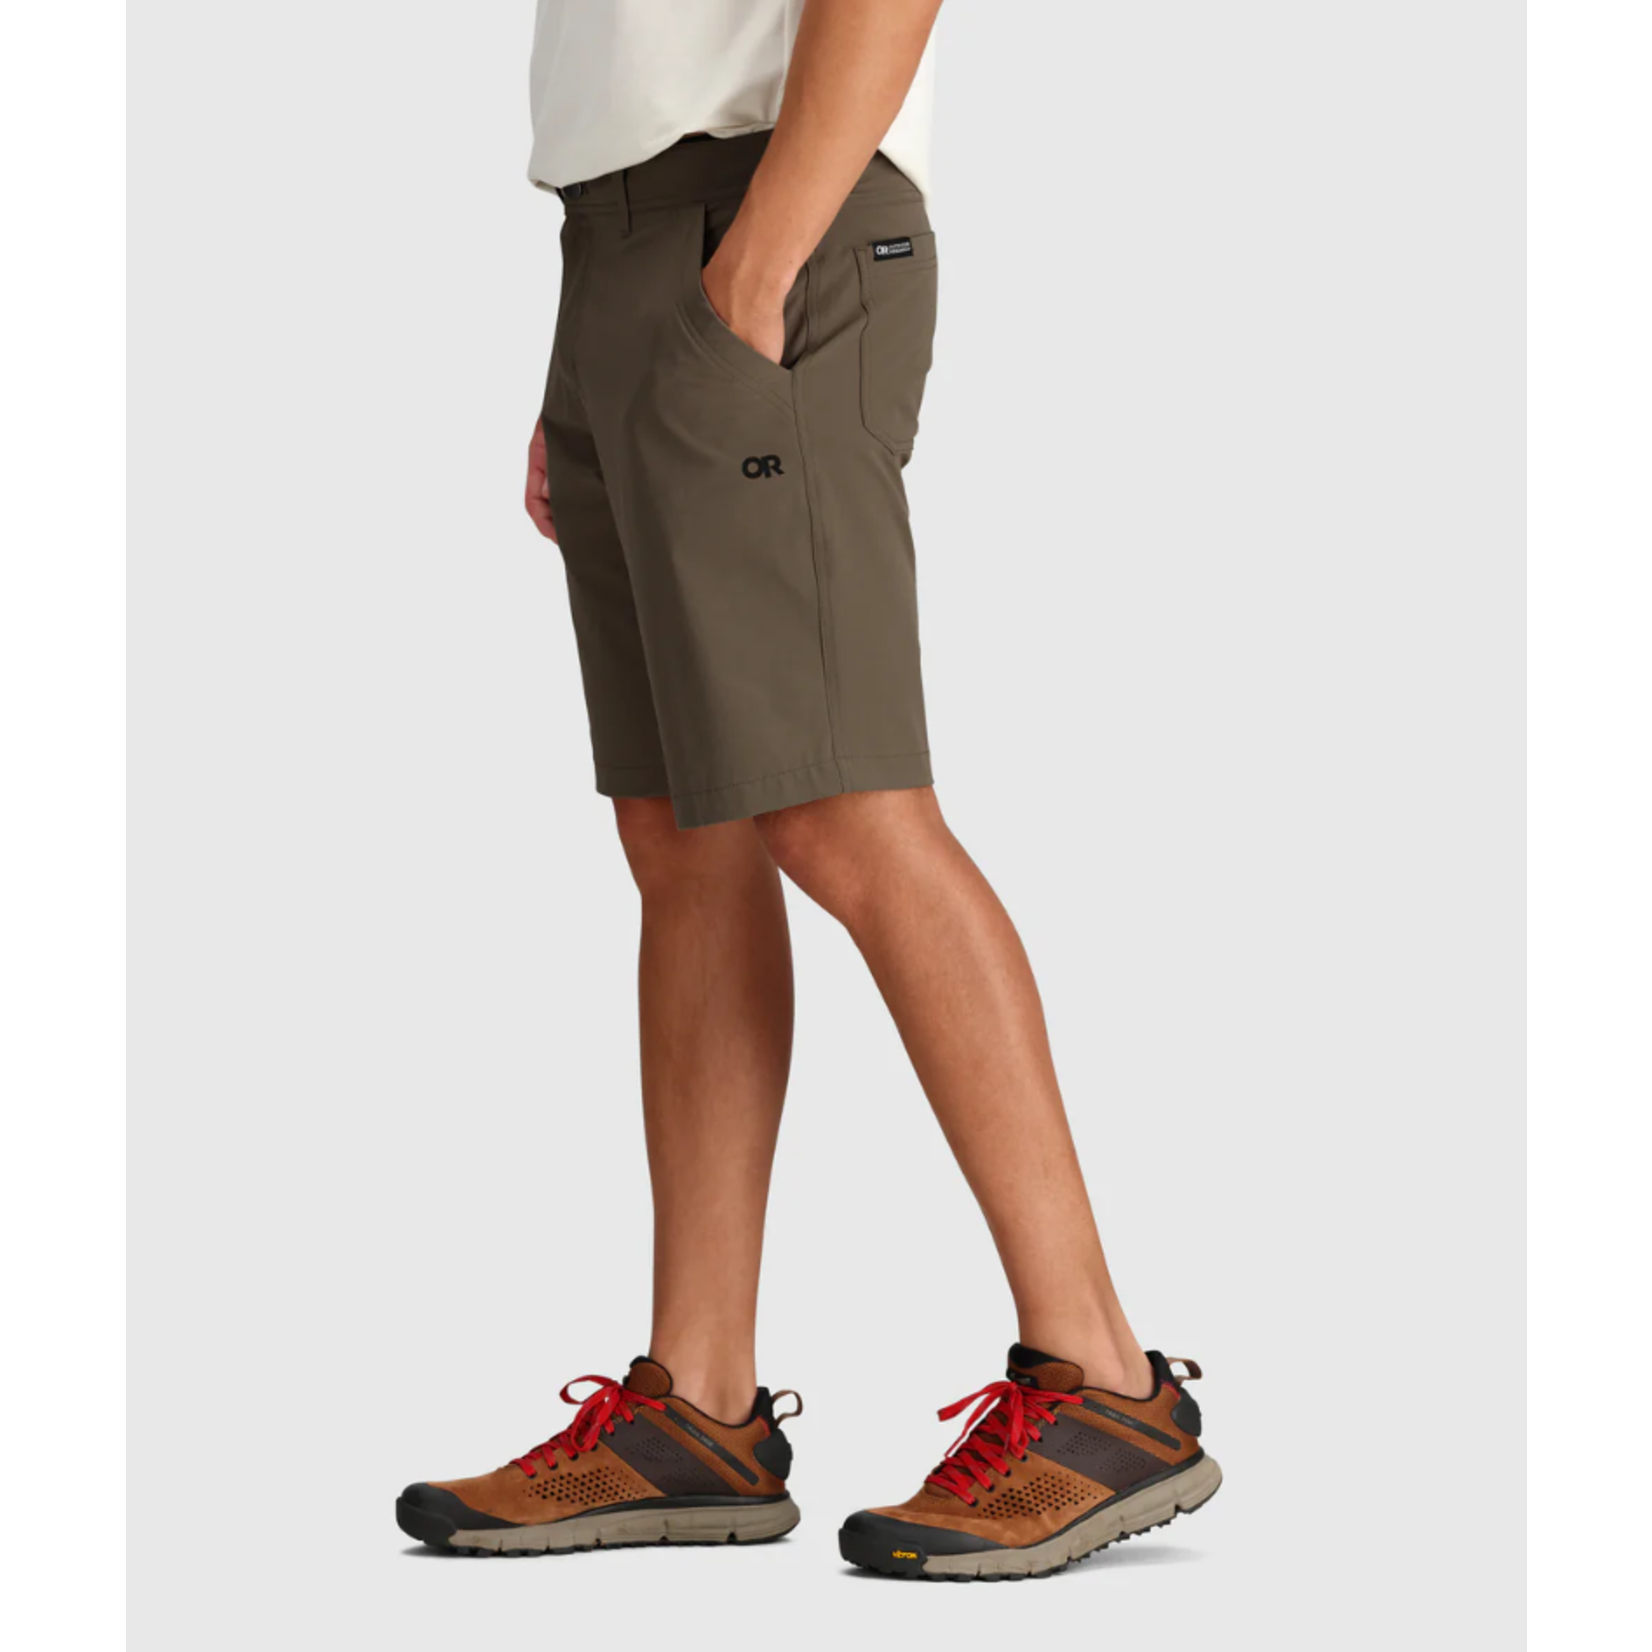 Outdoor Research Ferrosi Shorts, 10" inseam